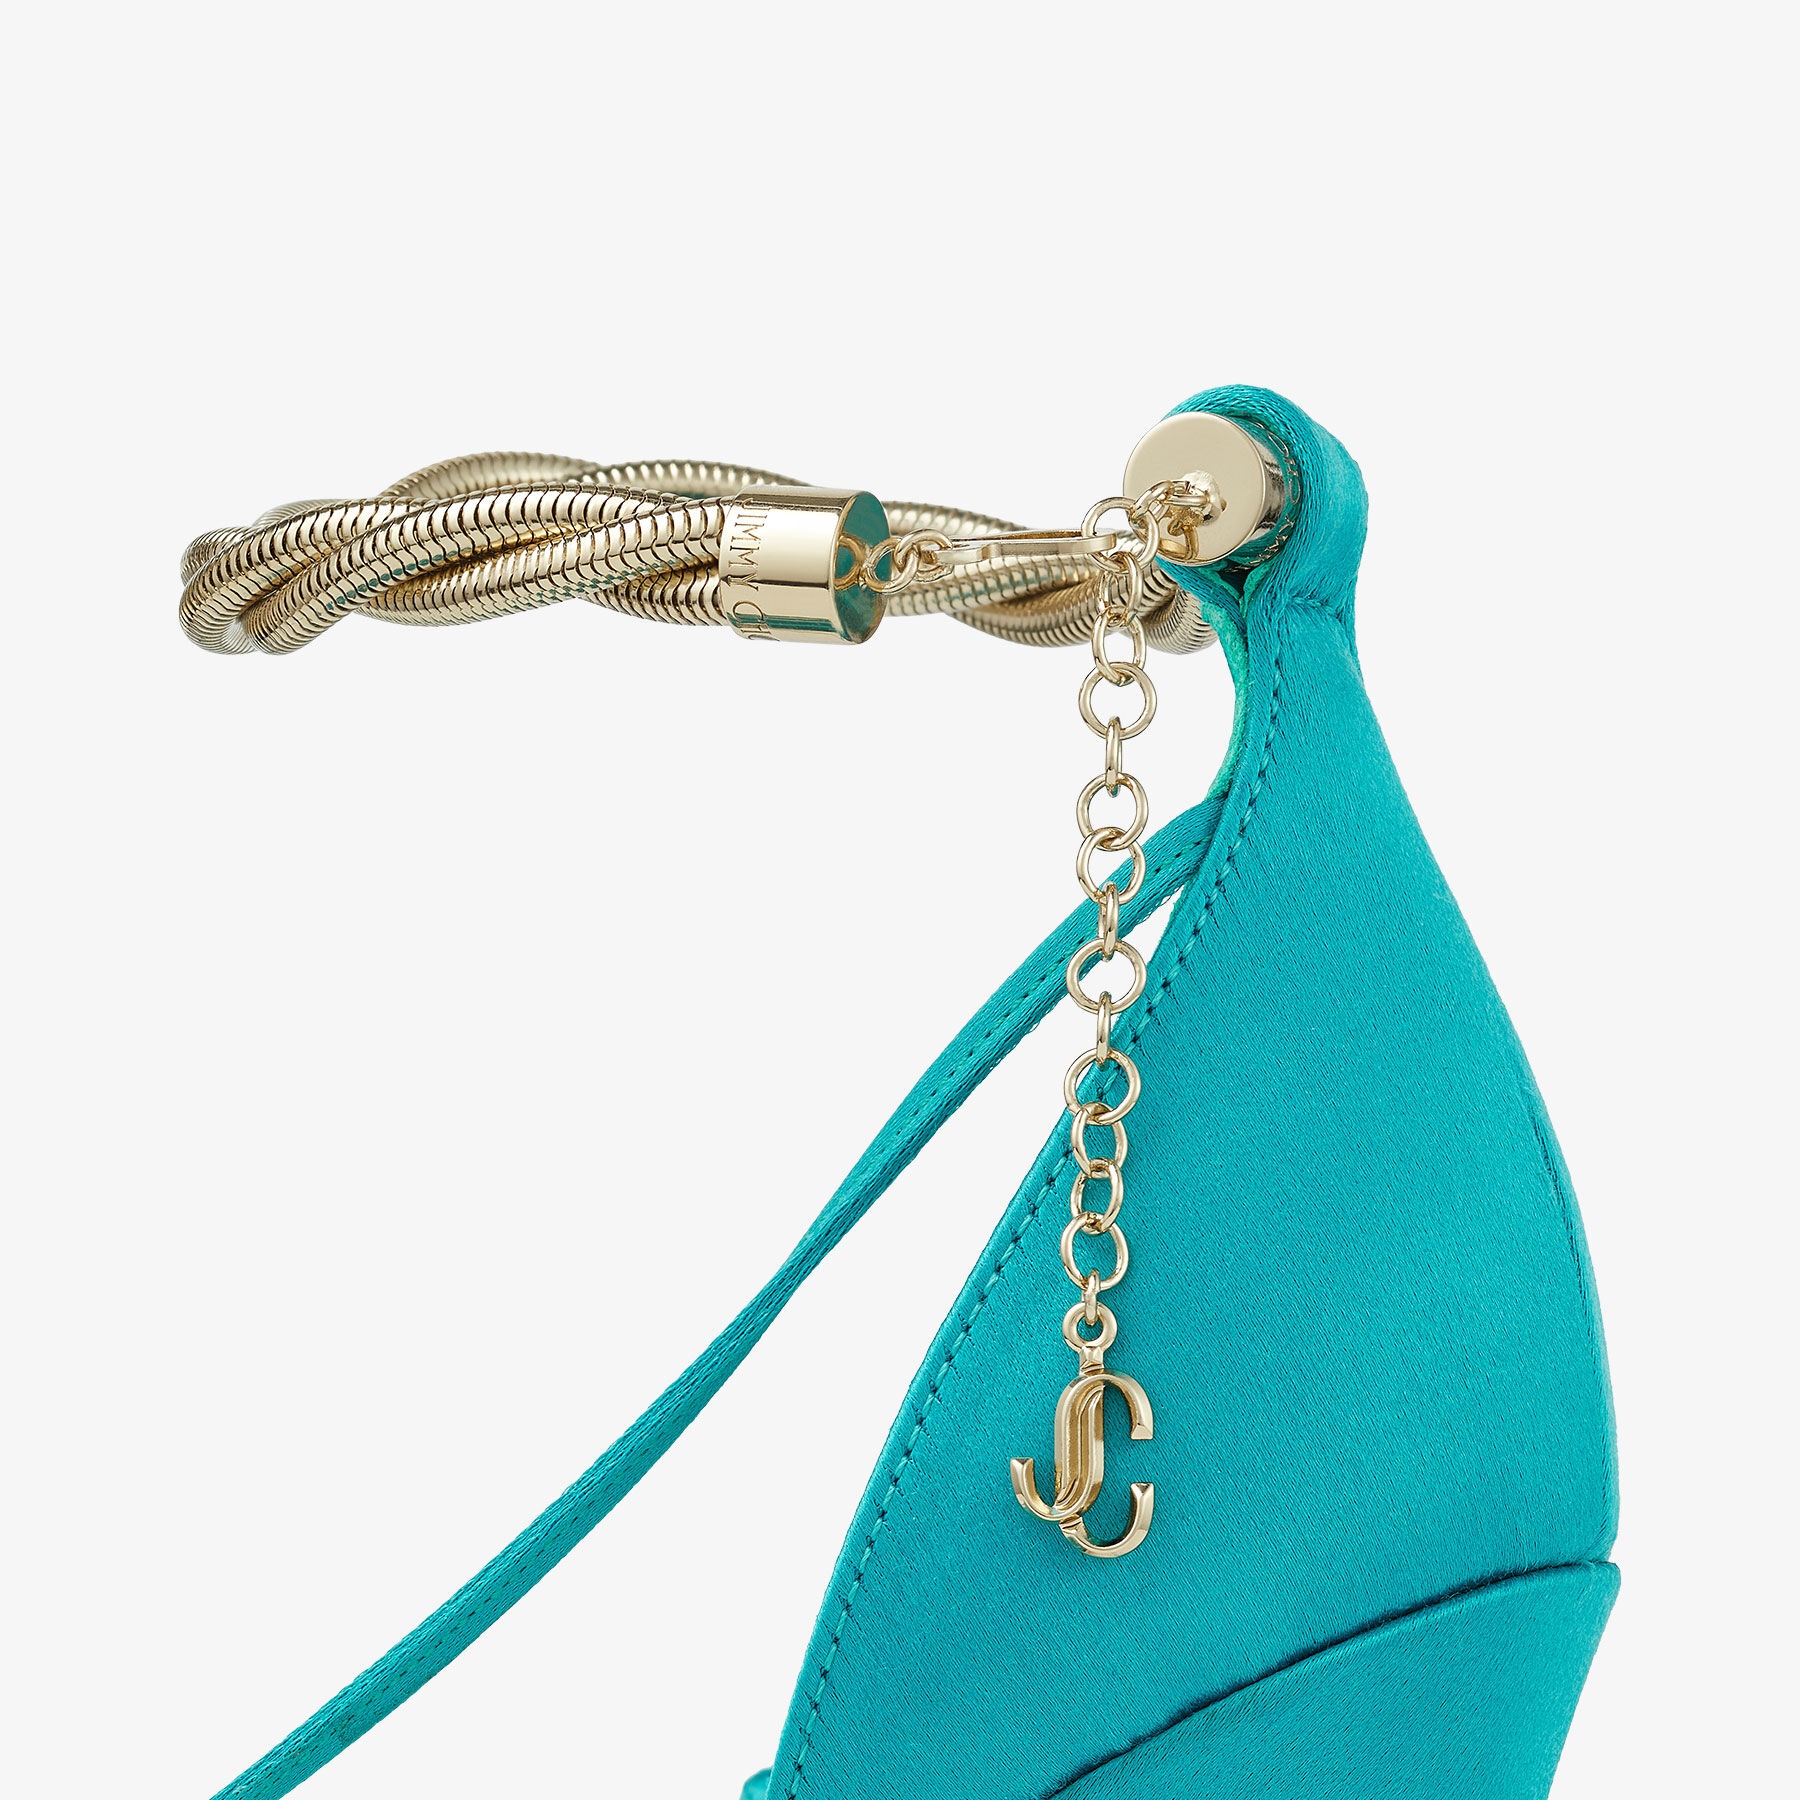 Oriana 110
Malibu Satin Sandals with Gold Chains - 4